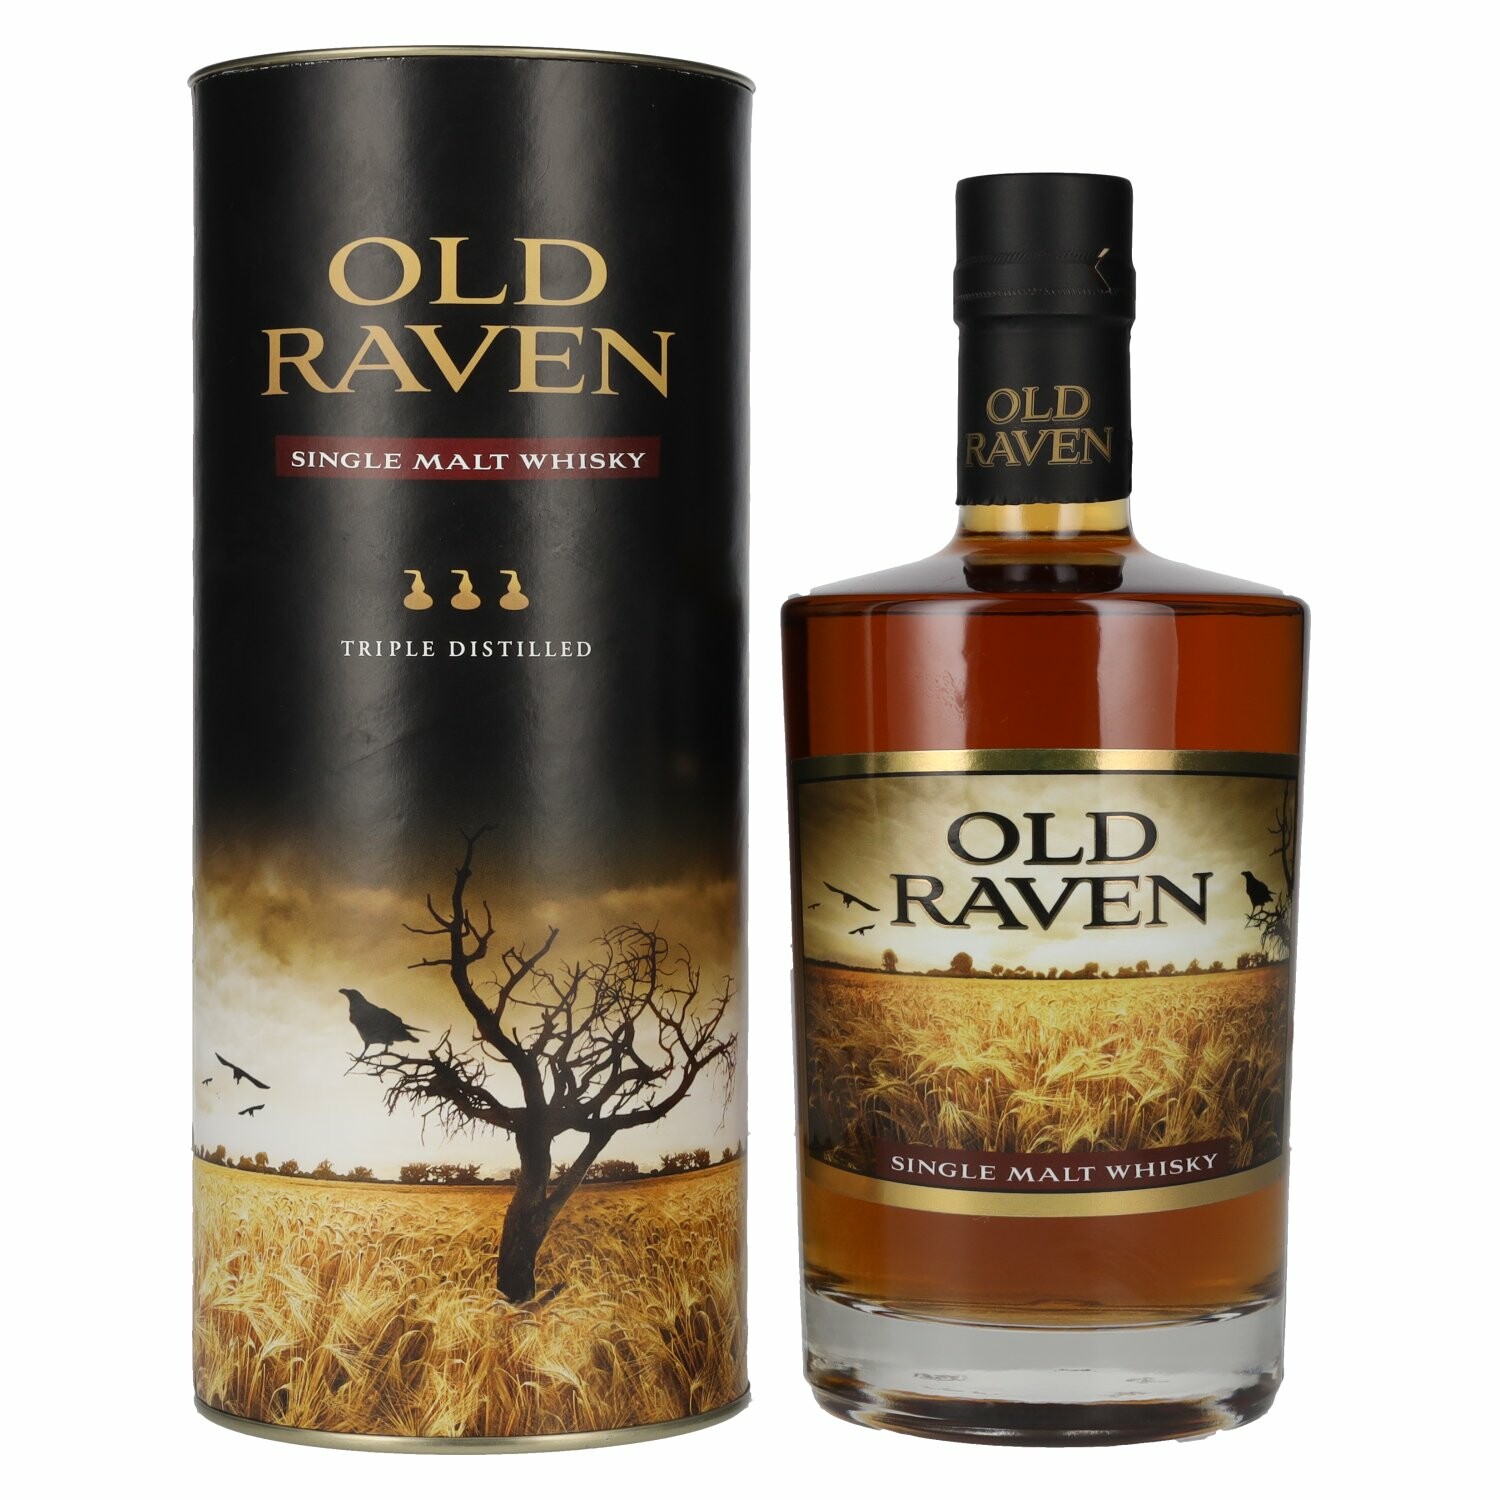 Old Raven Triple Distilled Single Malt Whisky 40,8% Vol. 0,5l in Giftbox